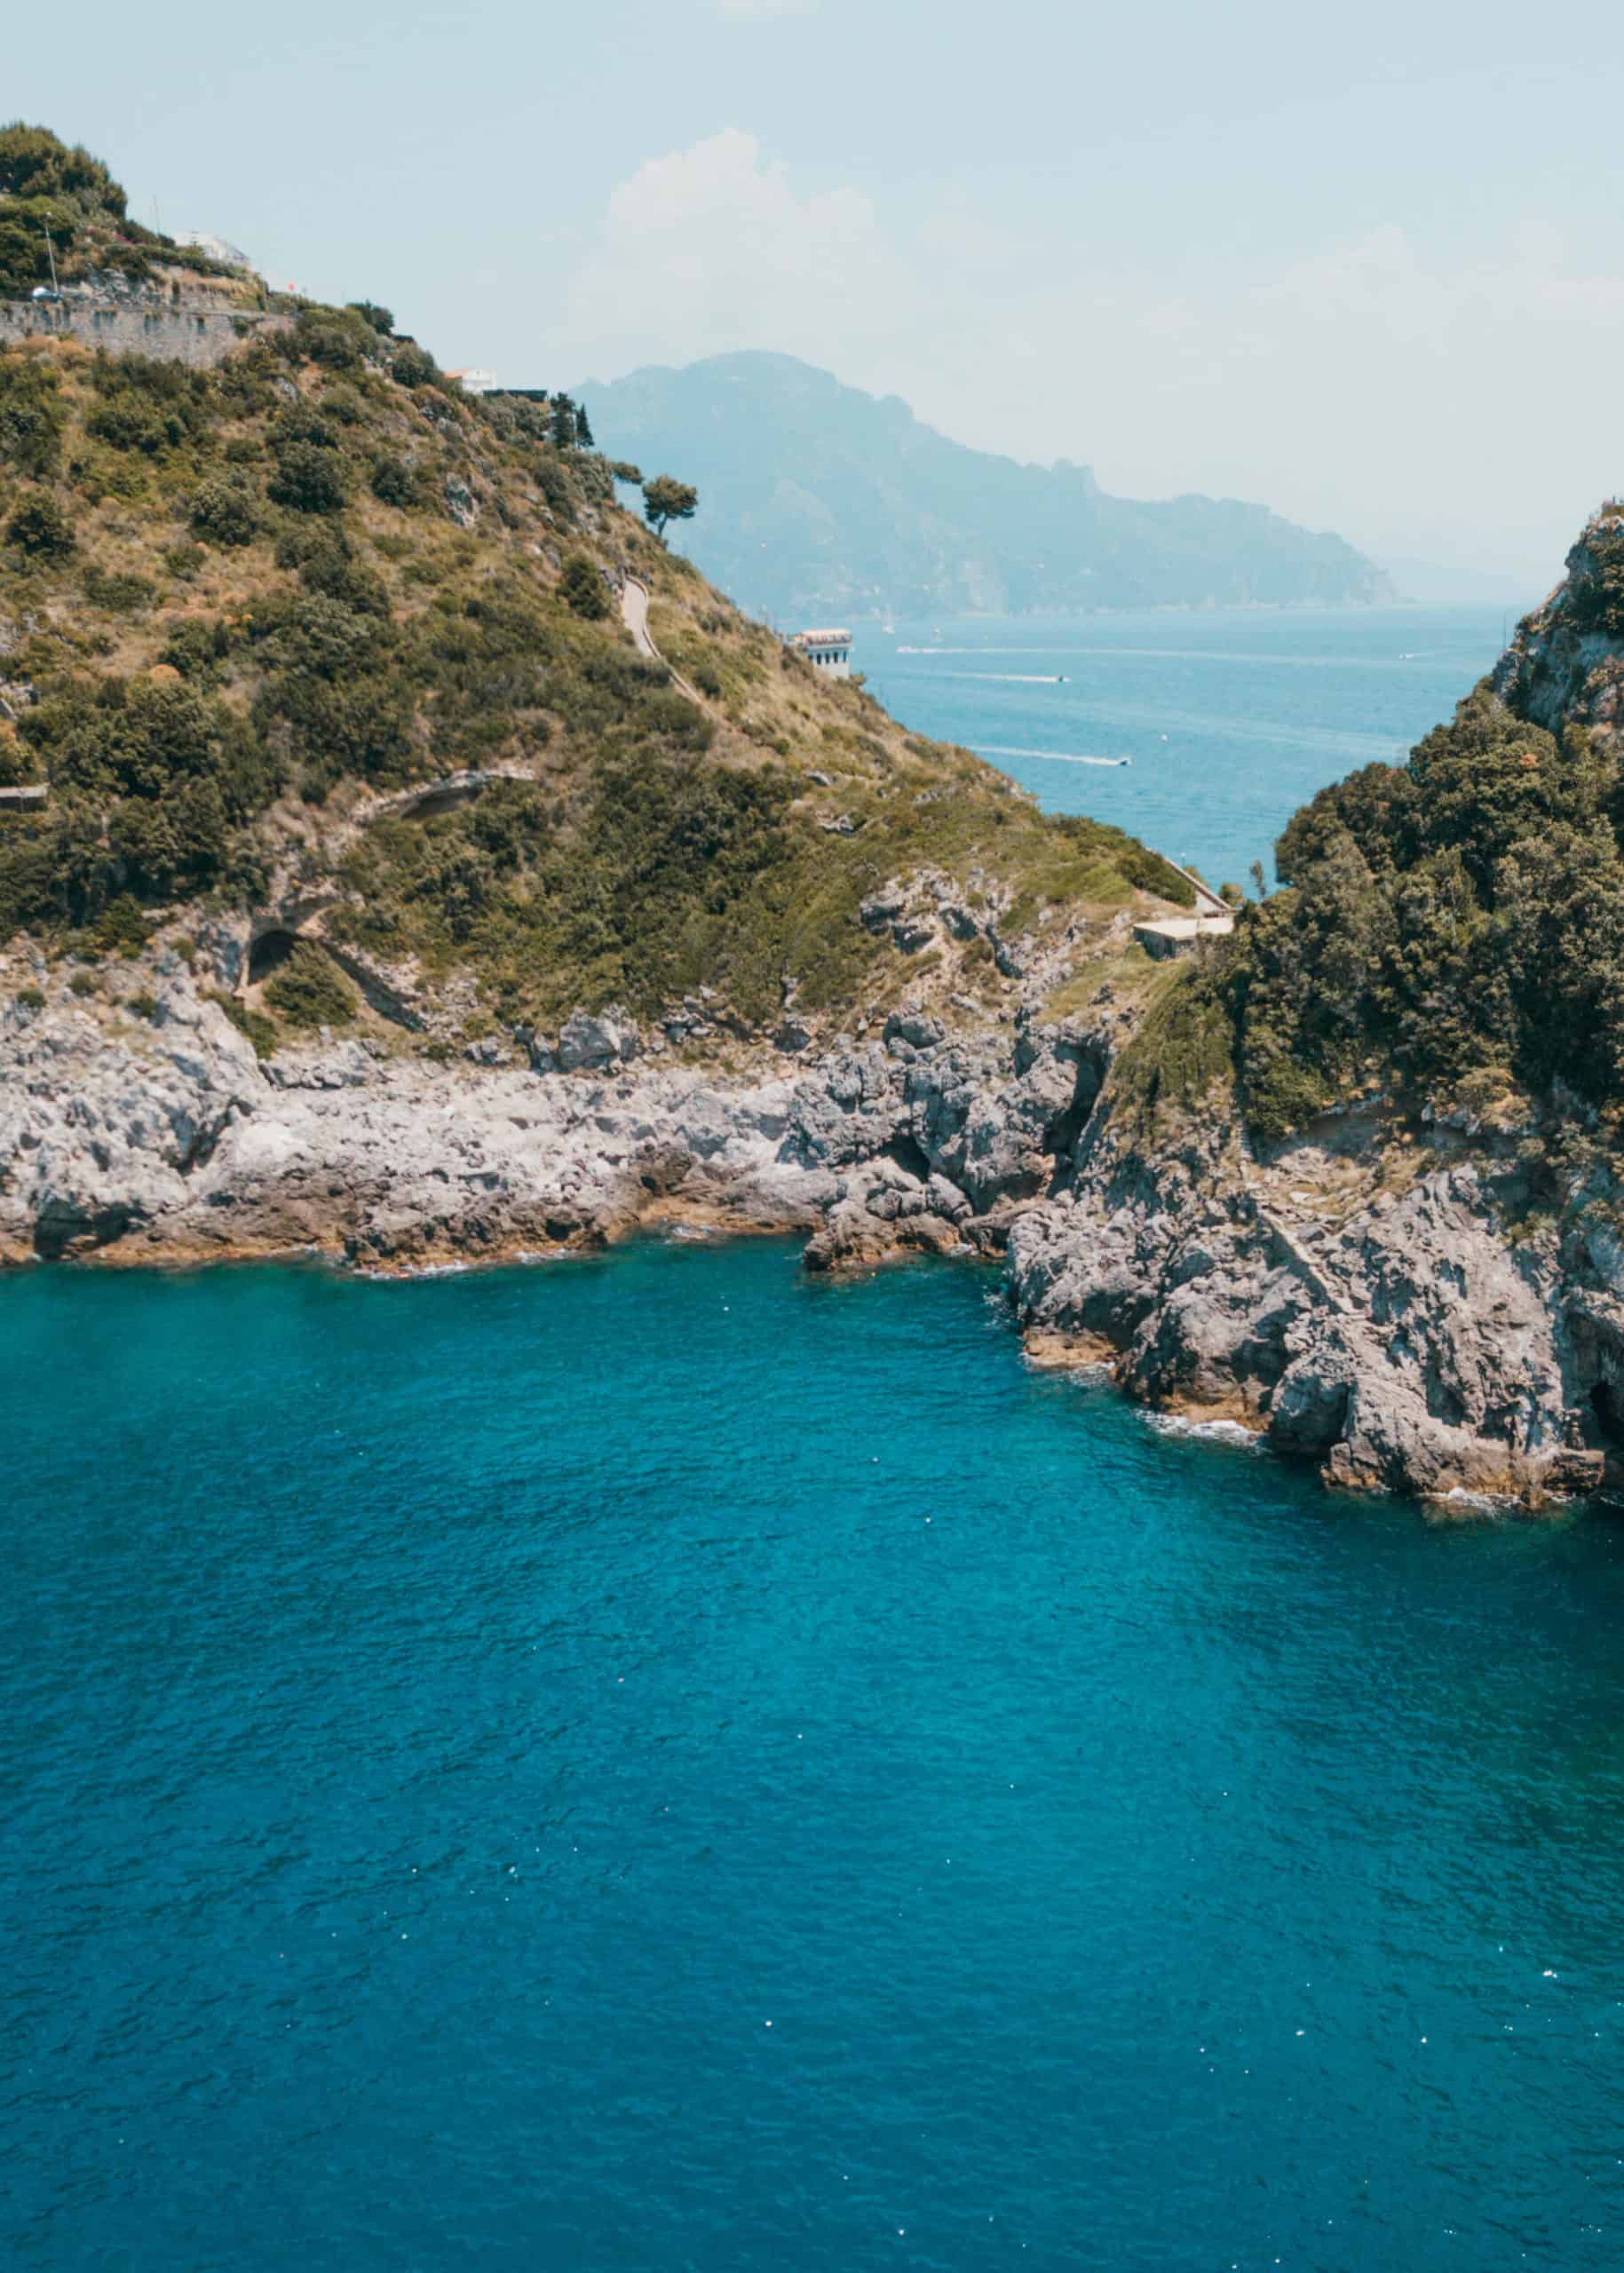 Amalfi Coast views in Italy